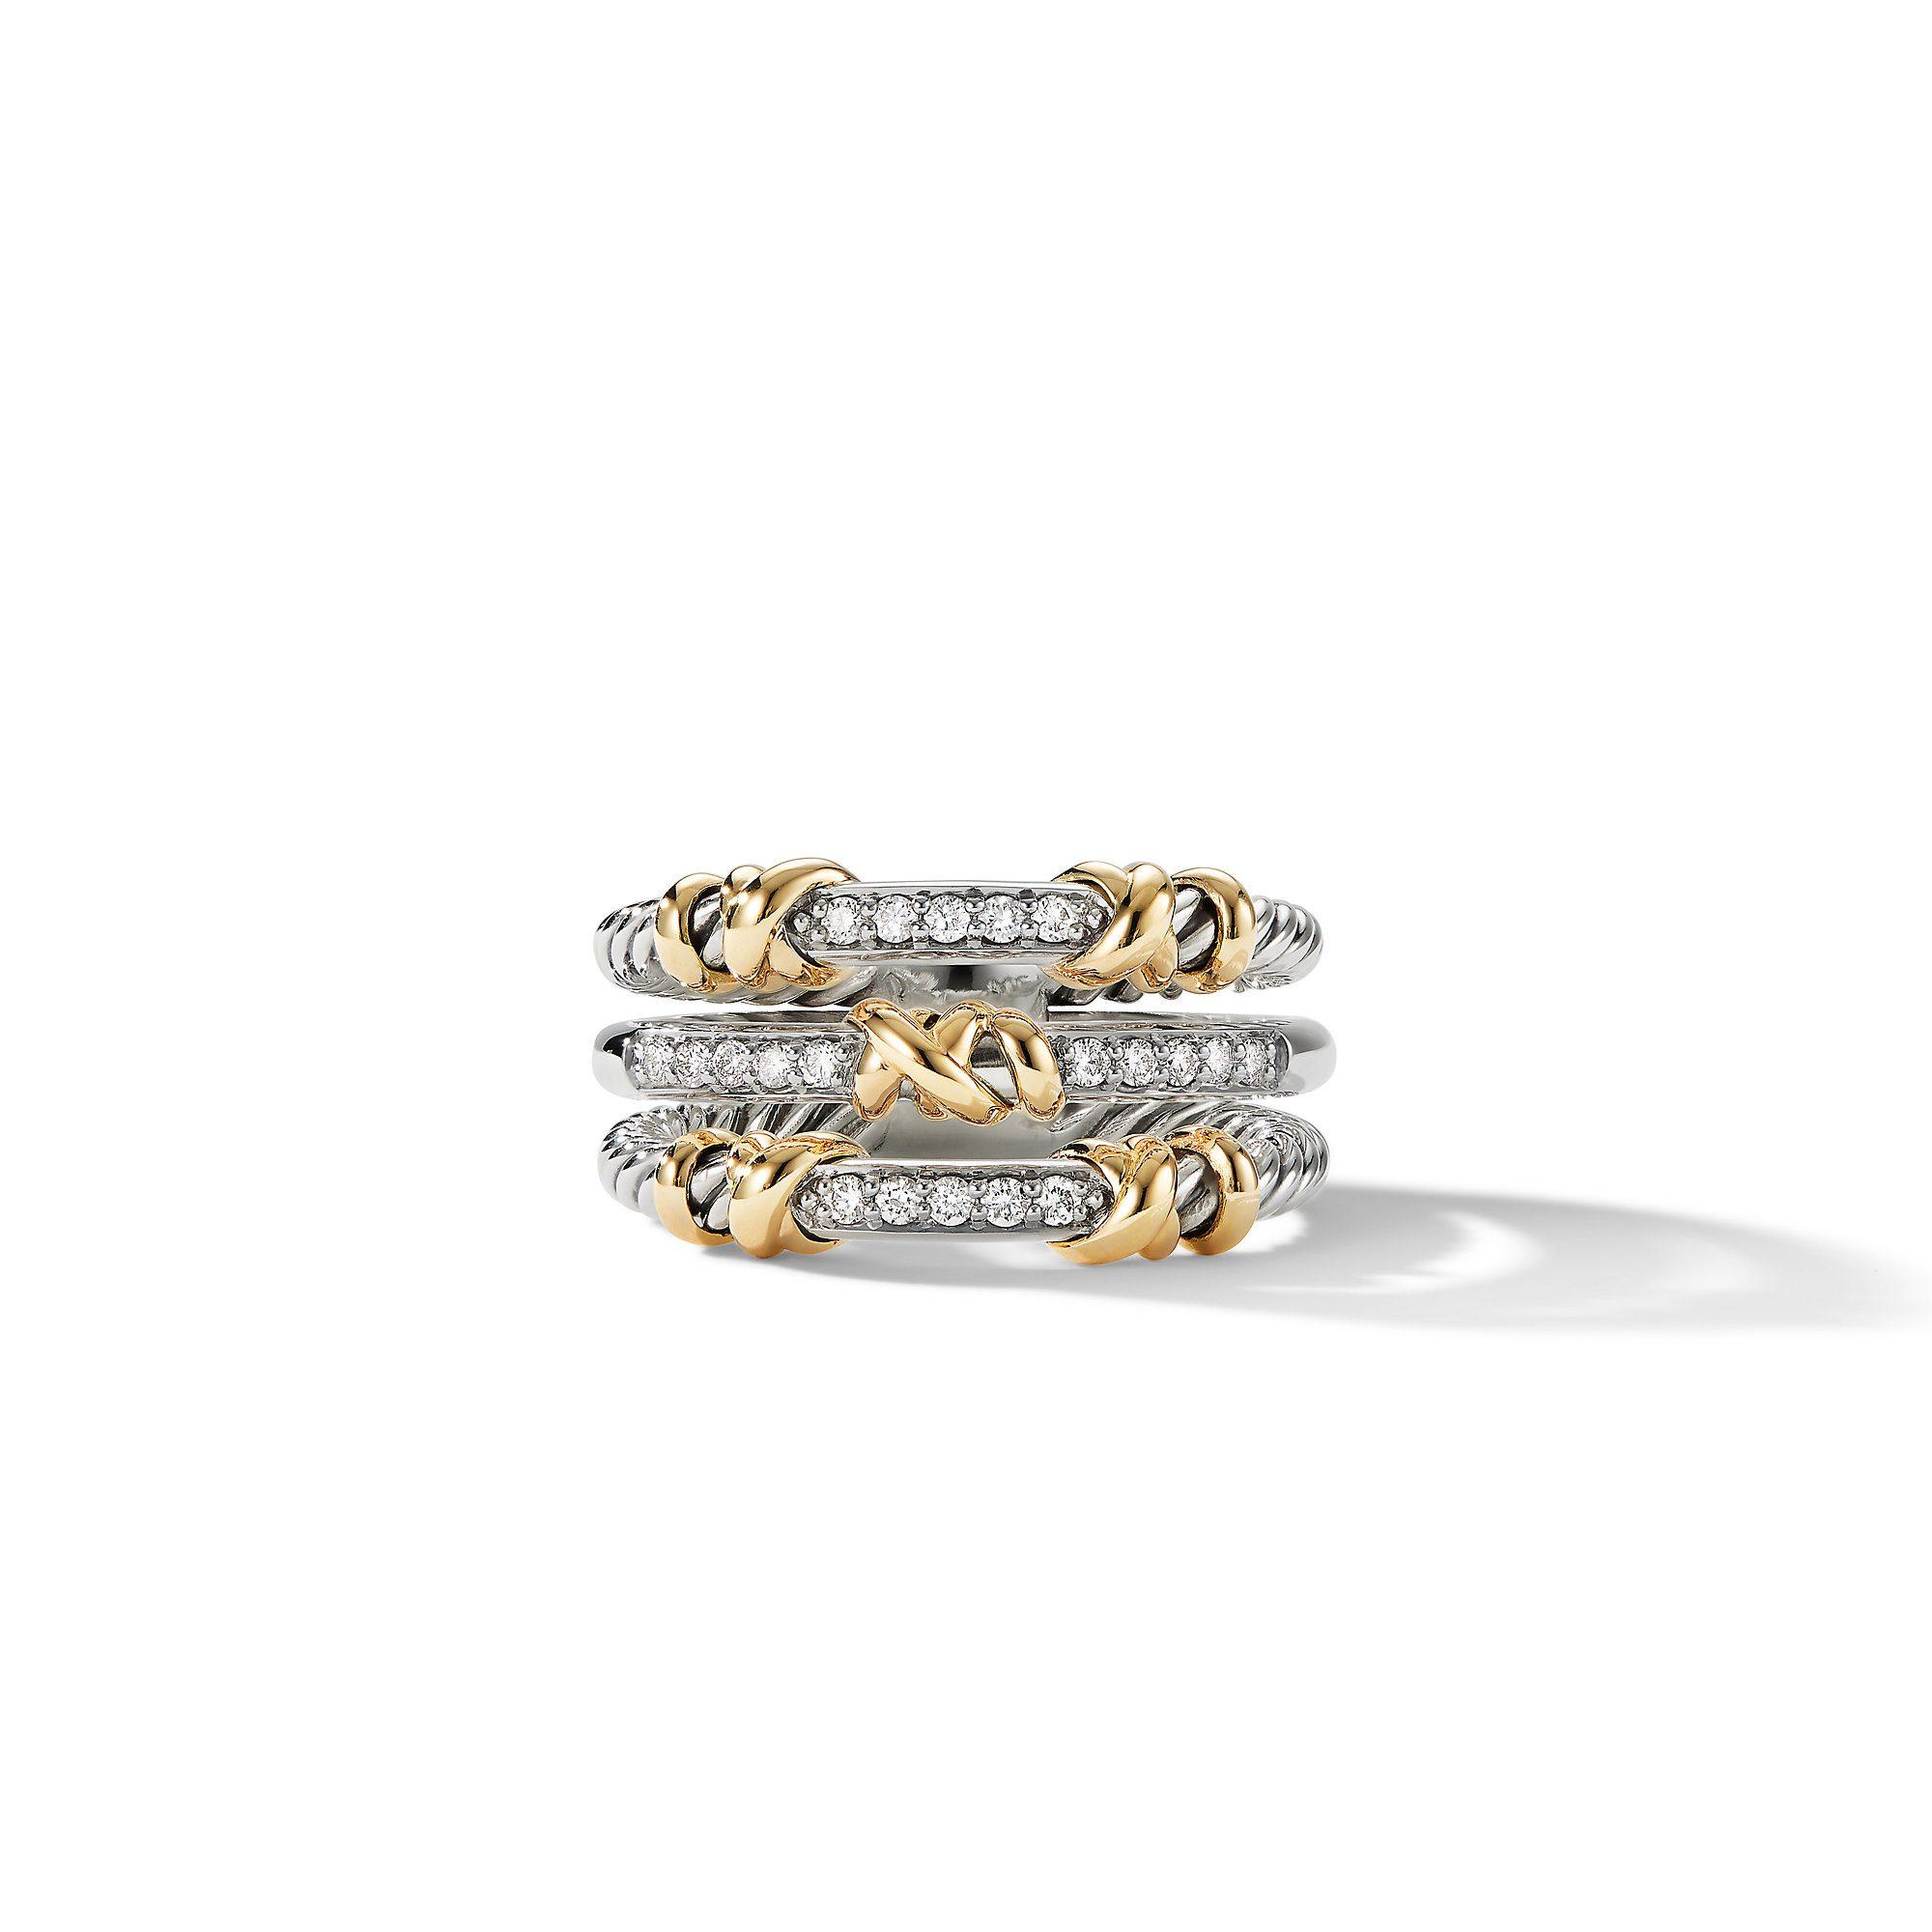 David Yurman Petite Helena Three Row Ring with 18K Yellow Gold and Diamonds | Front View